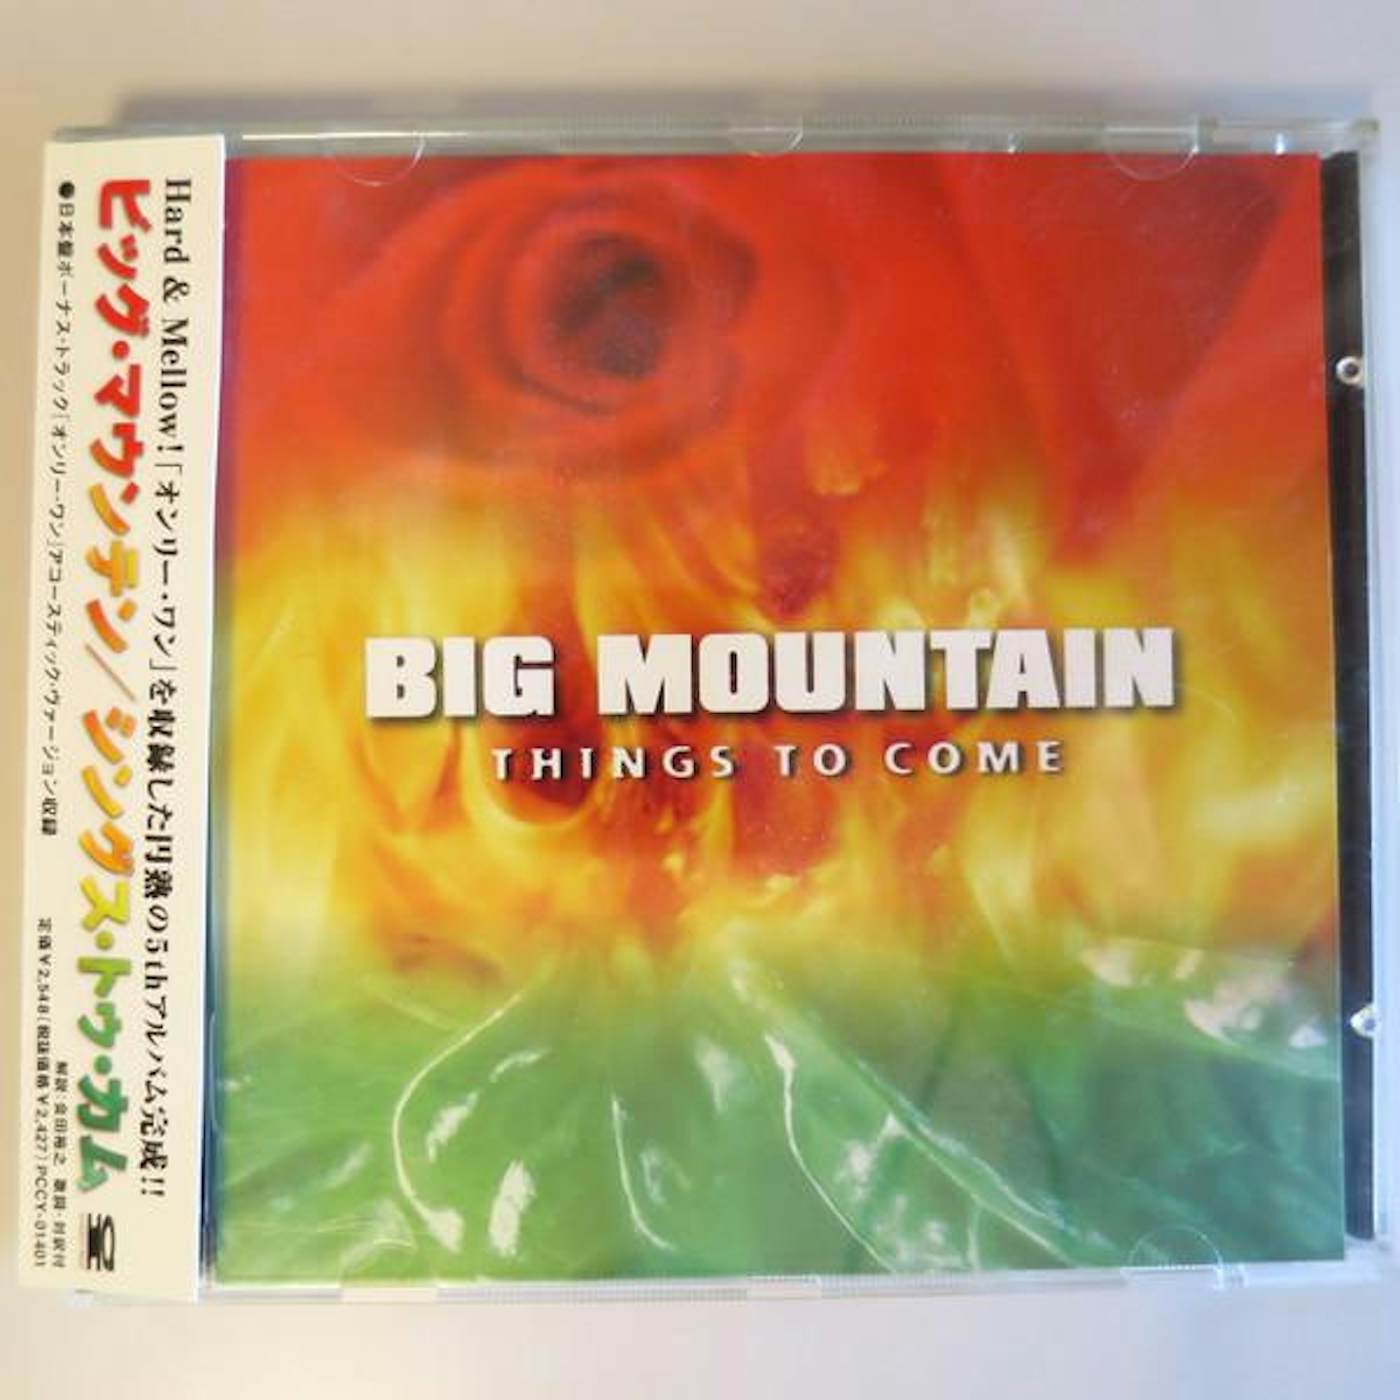 Big Mountain NEW ALBUM CD